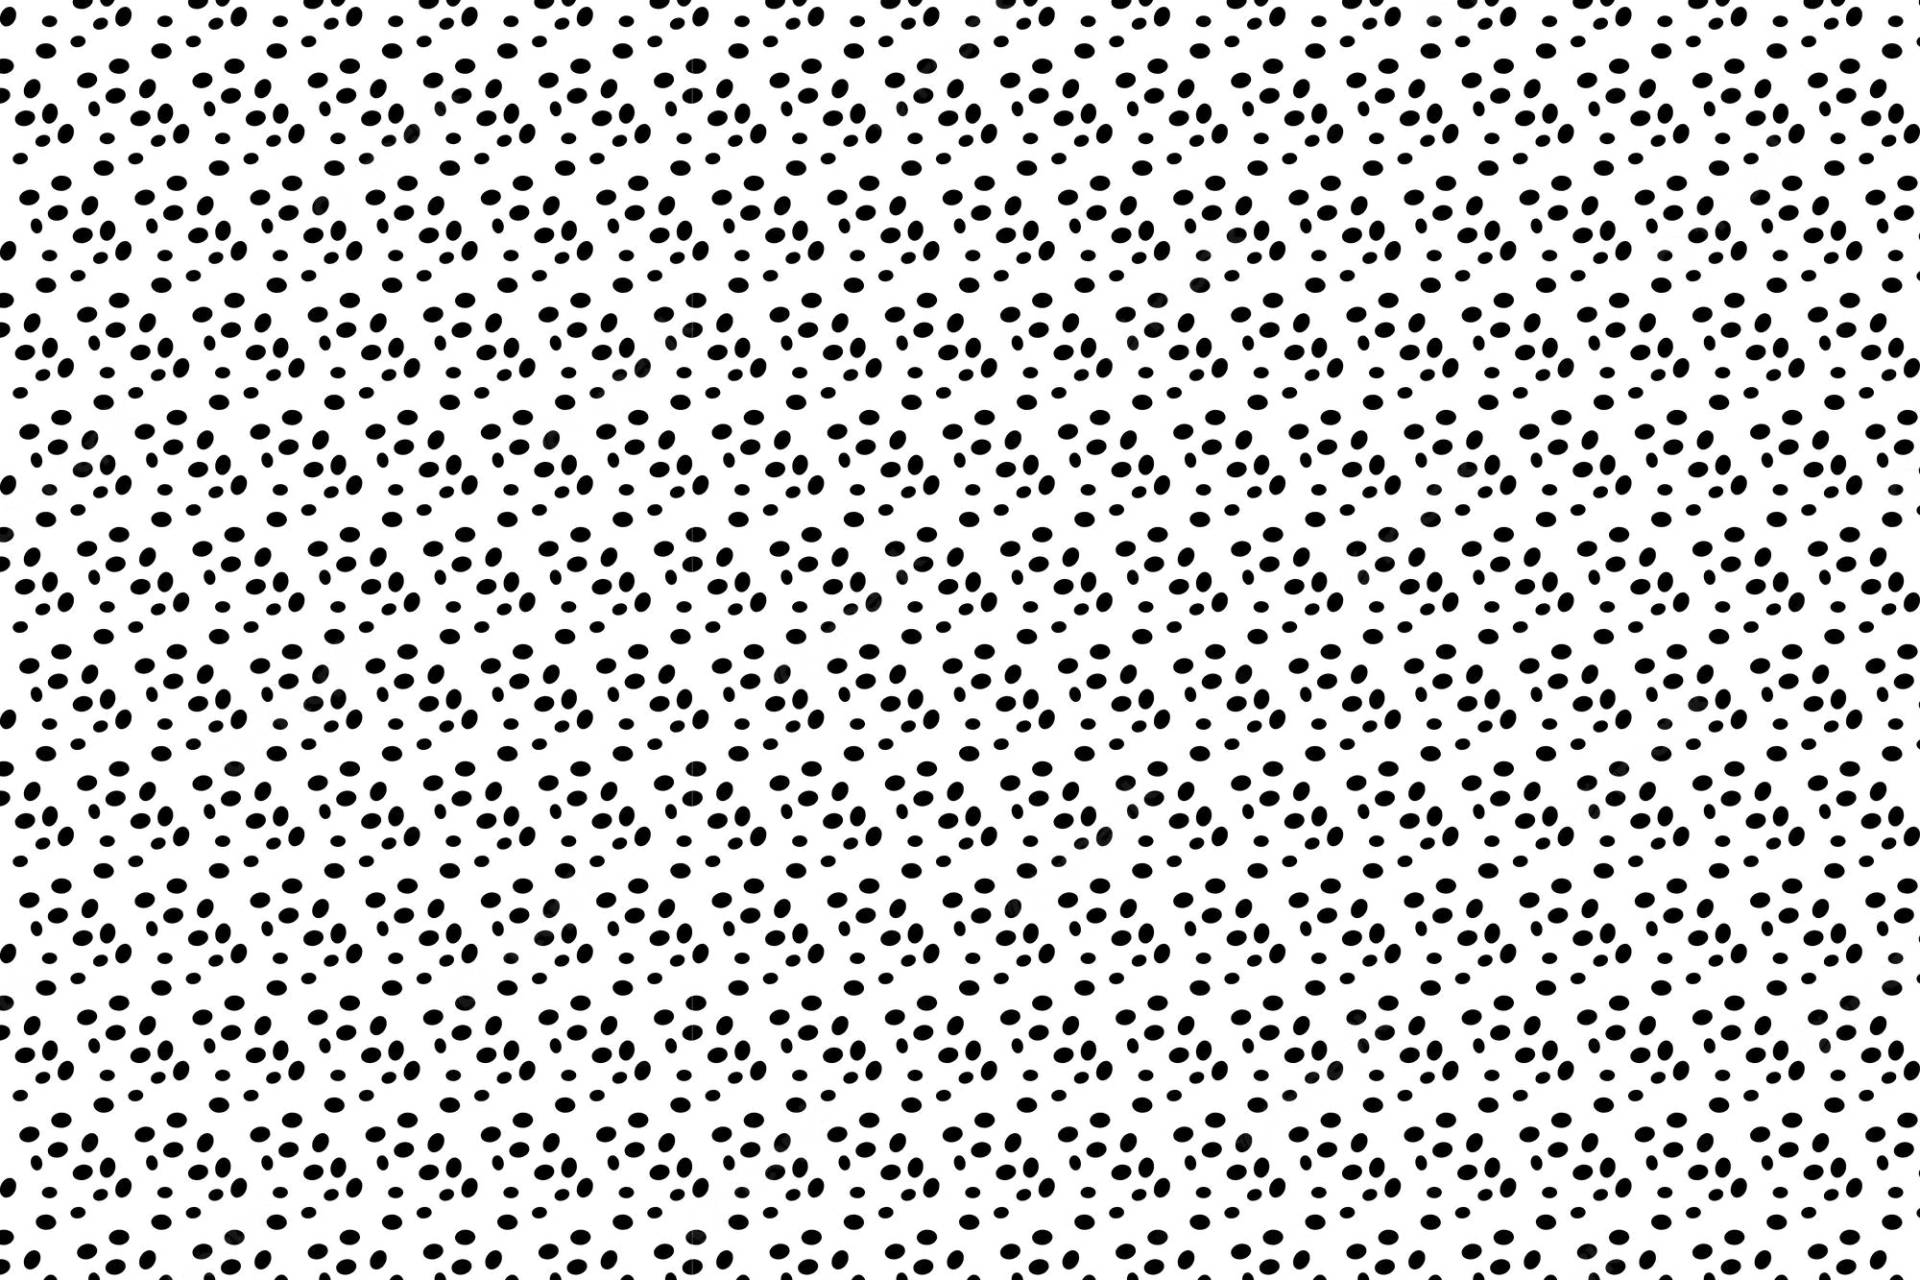 Irregular Specks Black Dot iPhone Wallpaper